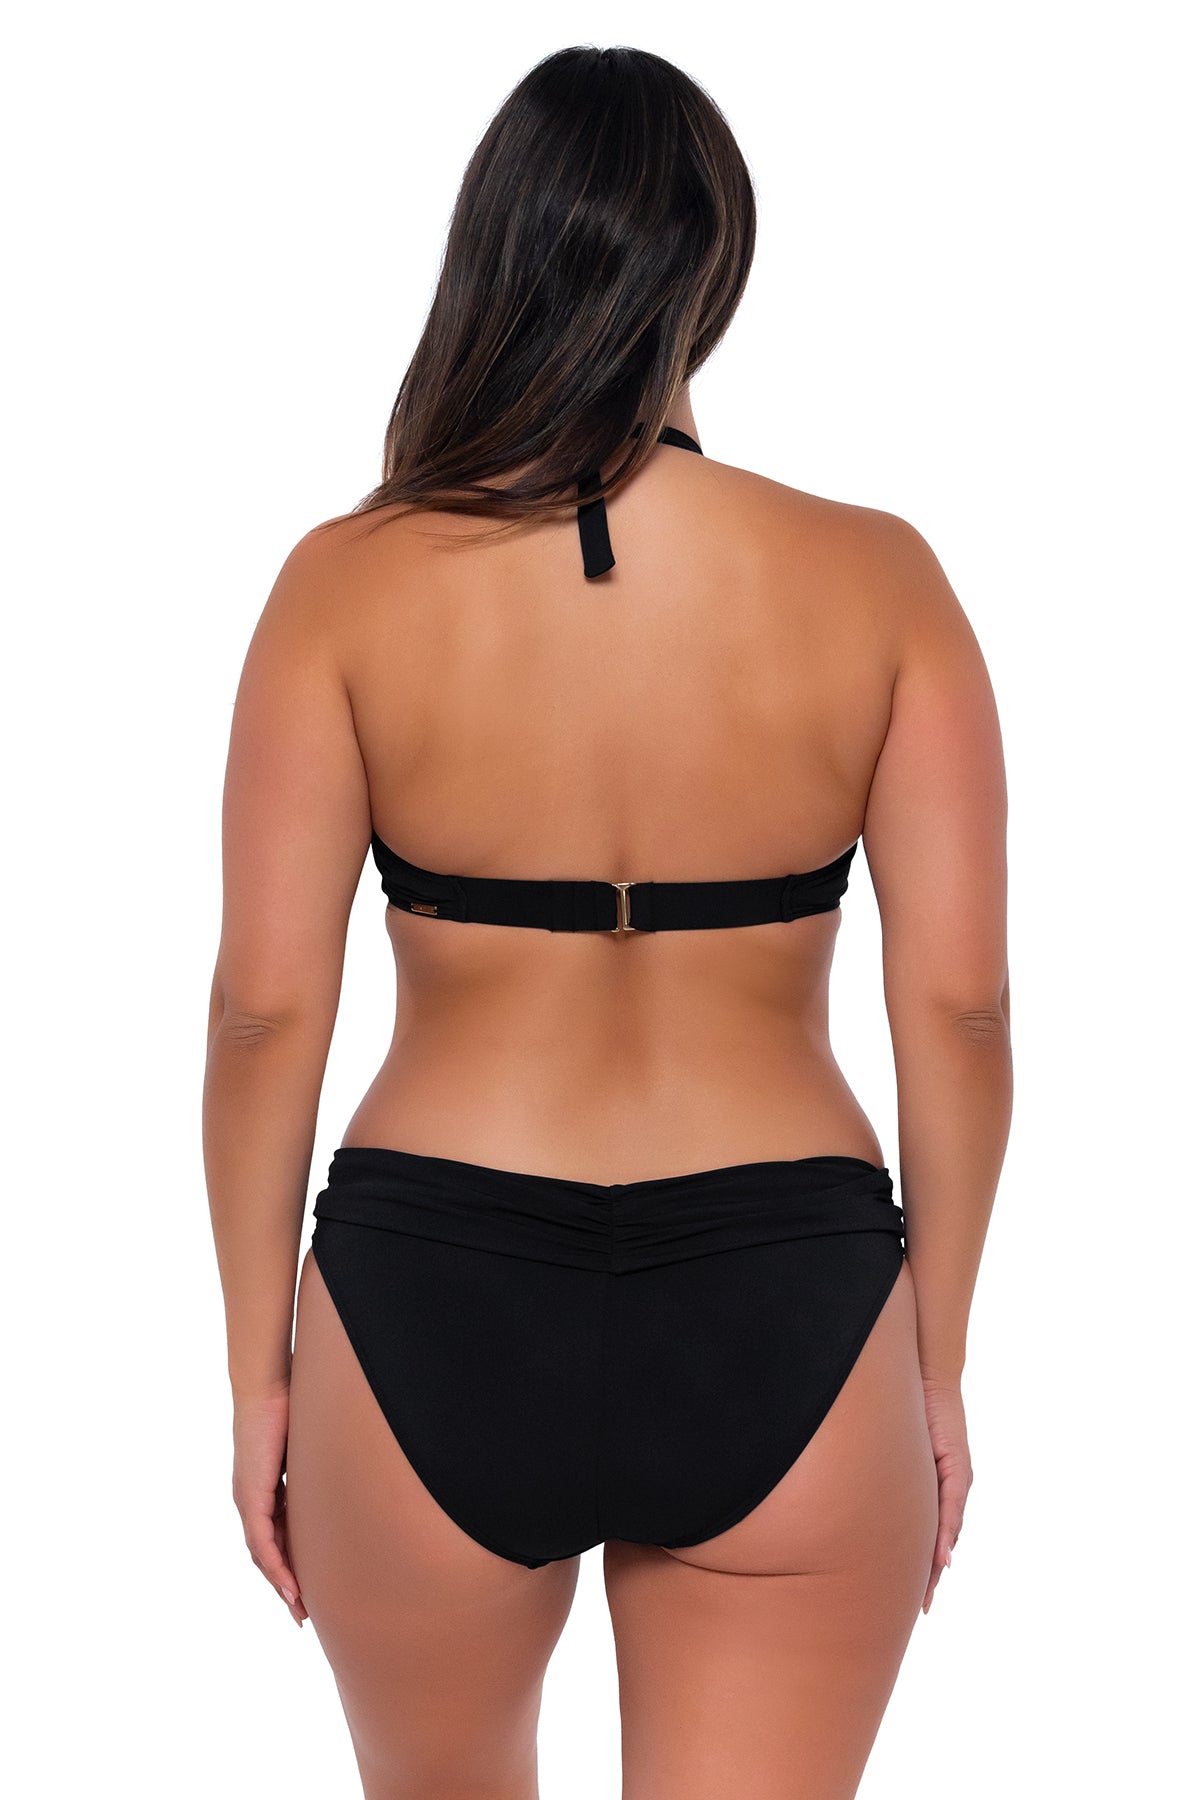 Black Bikini SET Plus Size Bandeau Bikini Top and Highwaist Bottom